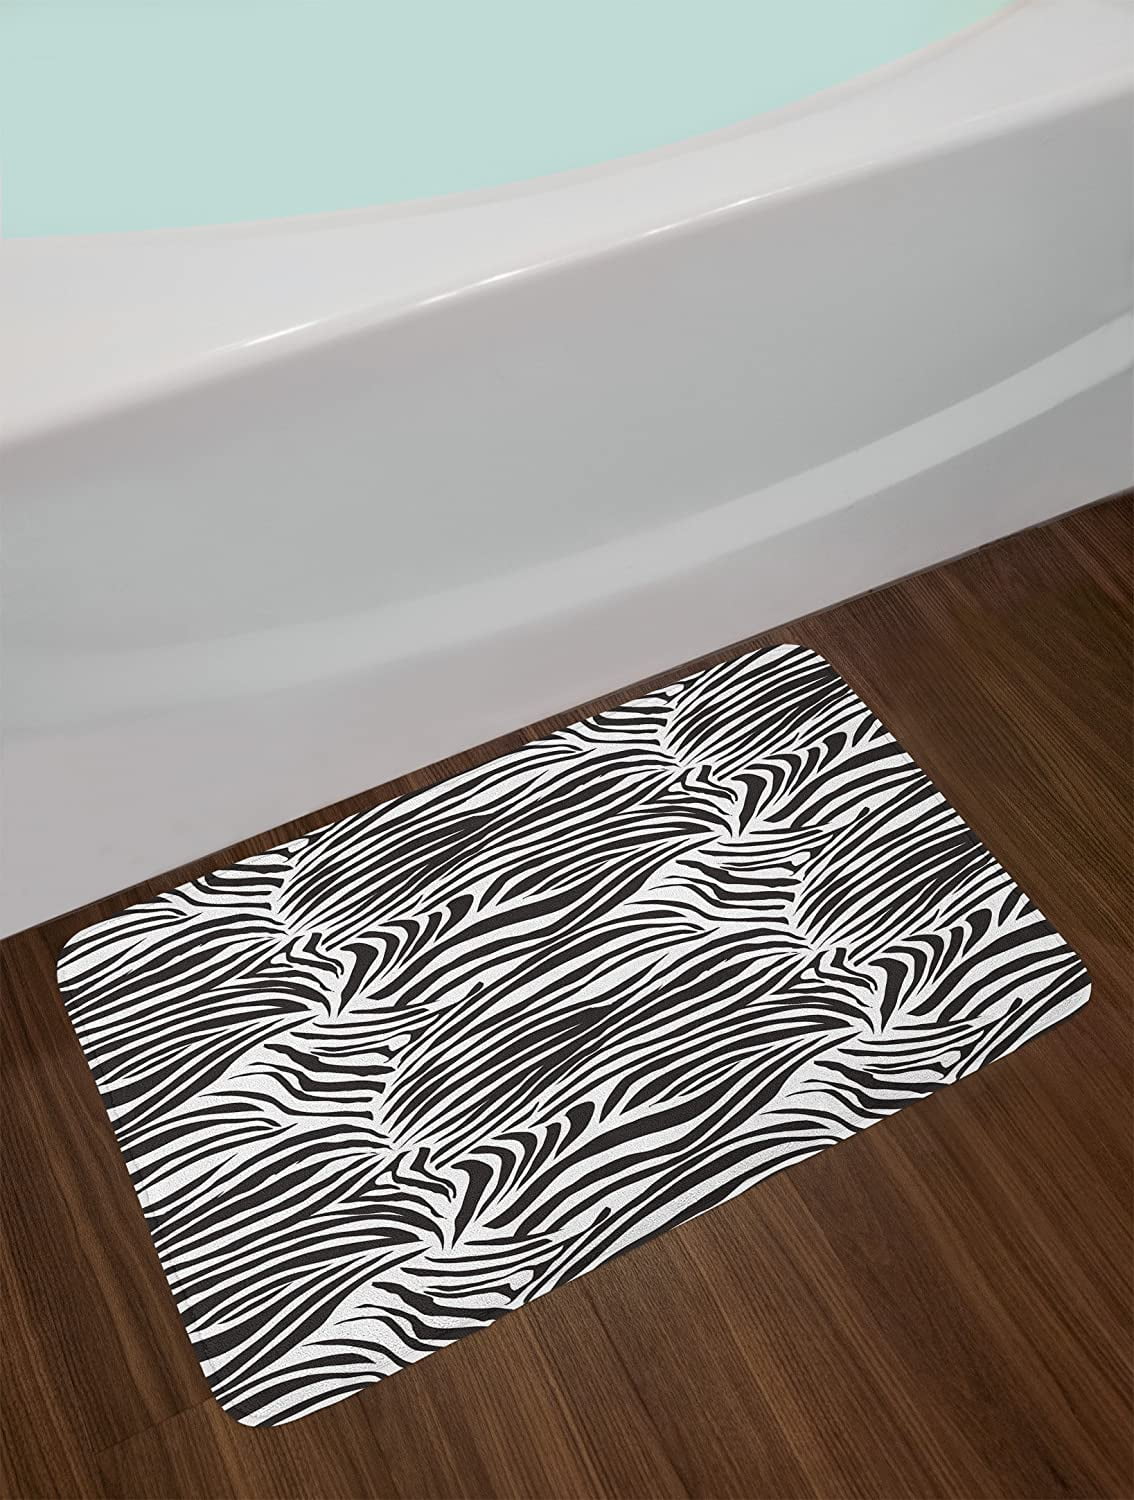 Zebra Print Bath Mat, Striped Zebra Animal Print Nature Wildlife Inspired  Simplistic Illustration, Plush Bathroom Decor Mat with Non Slip Backing,  29.5